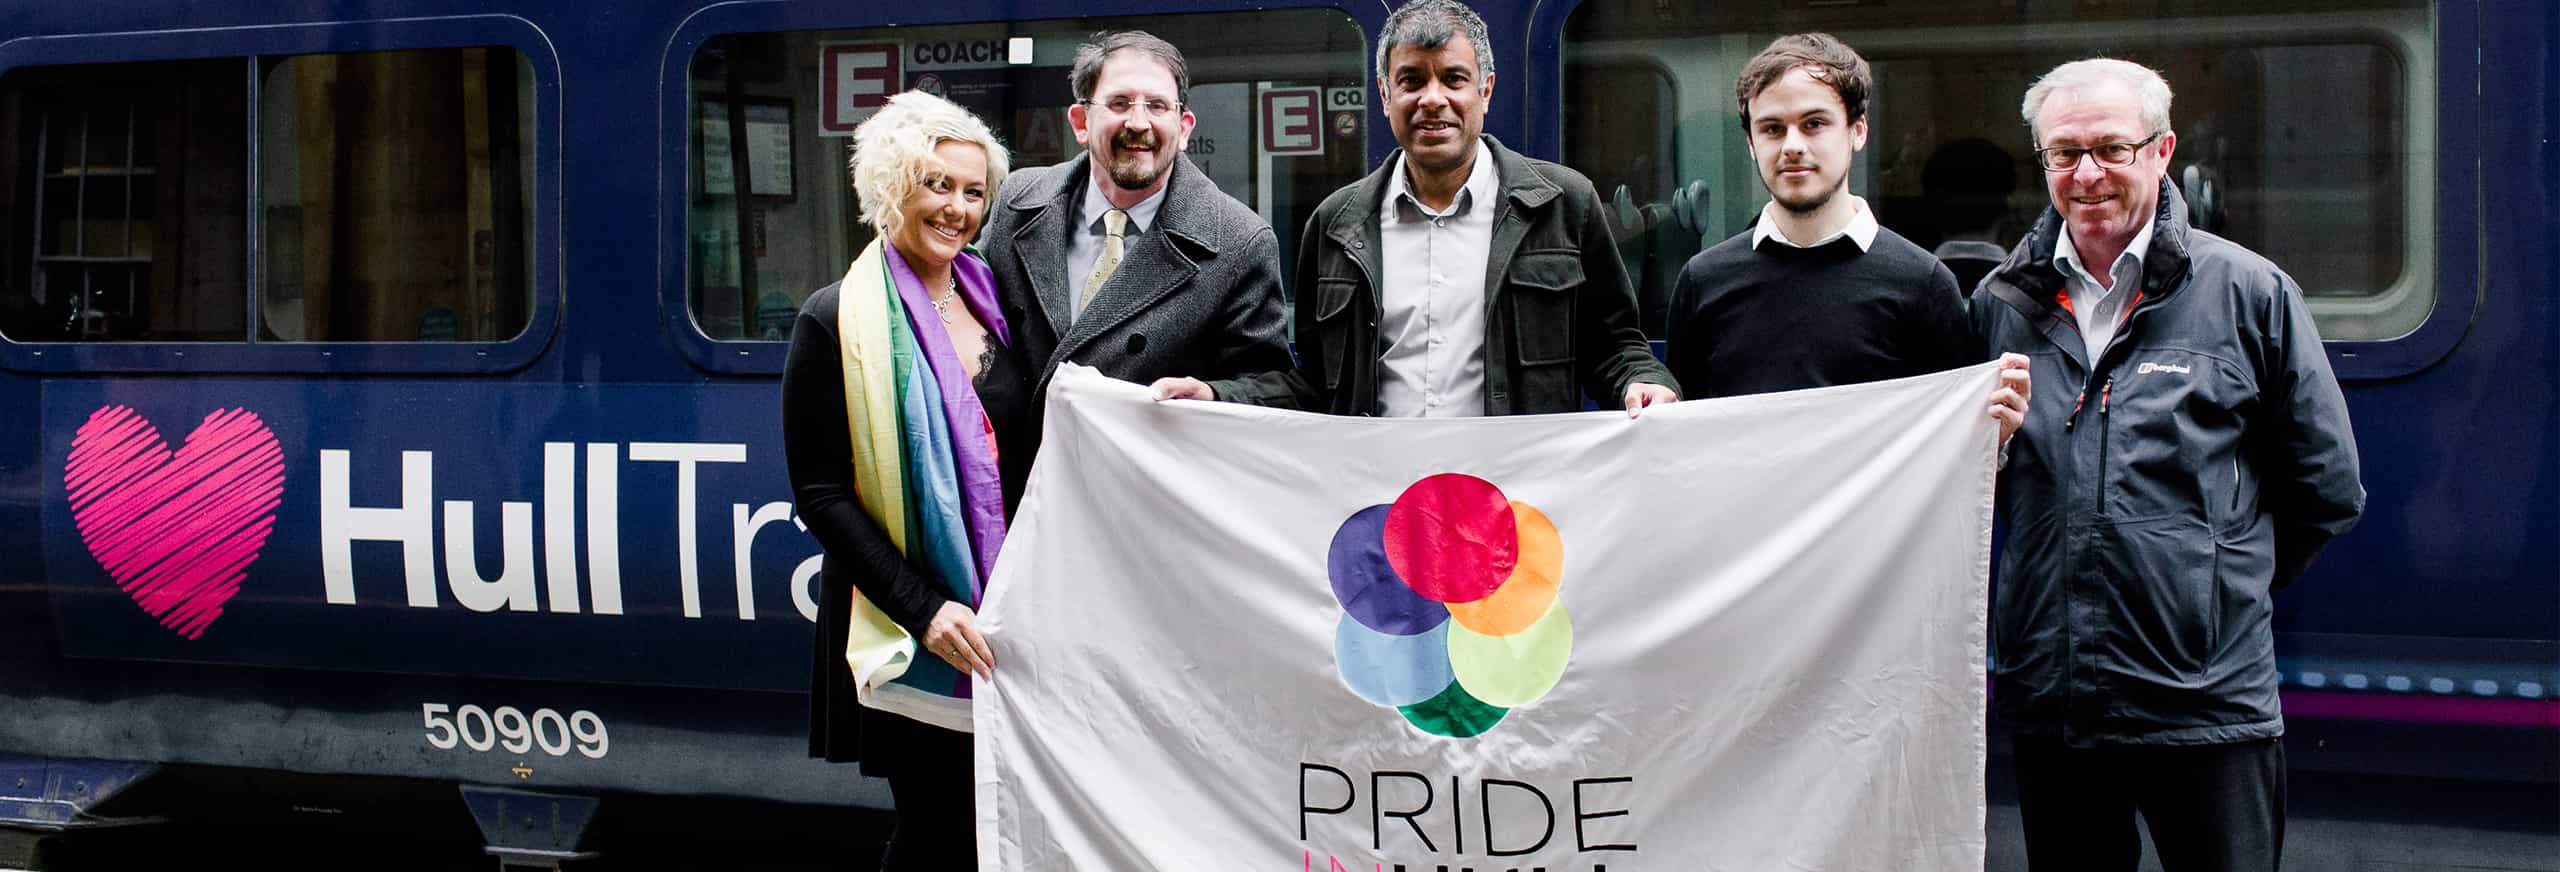 Hull Trains sponsors Pride